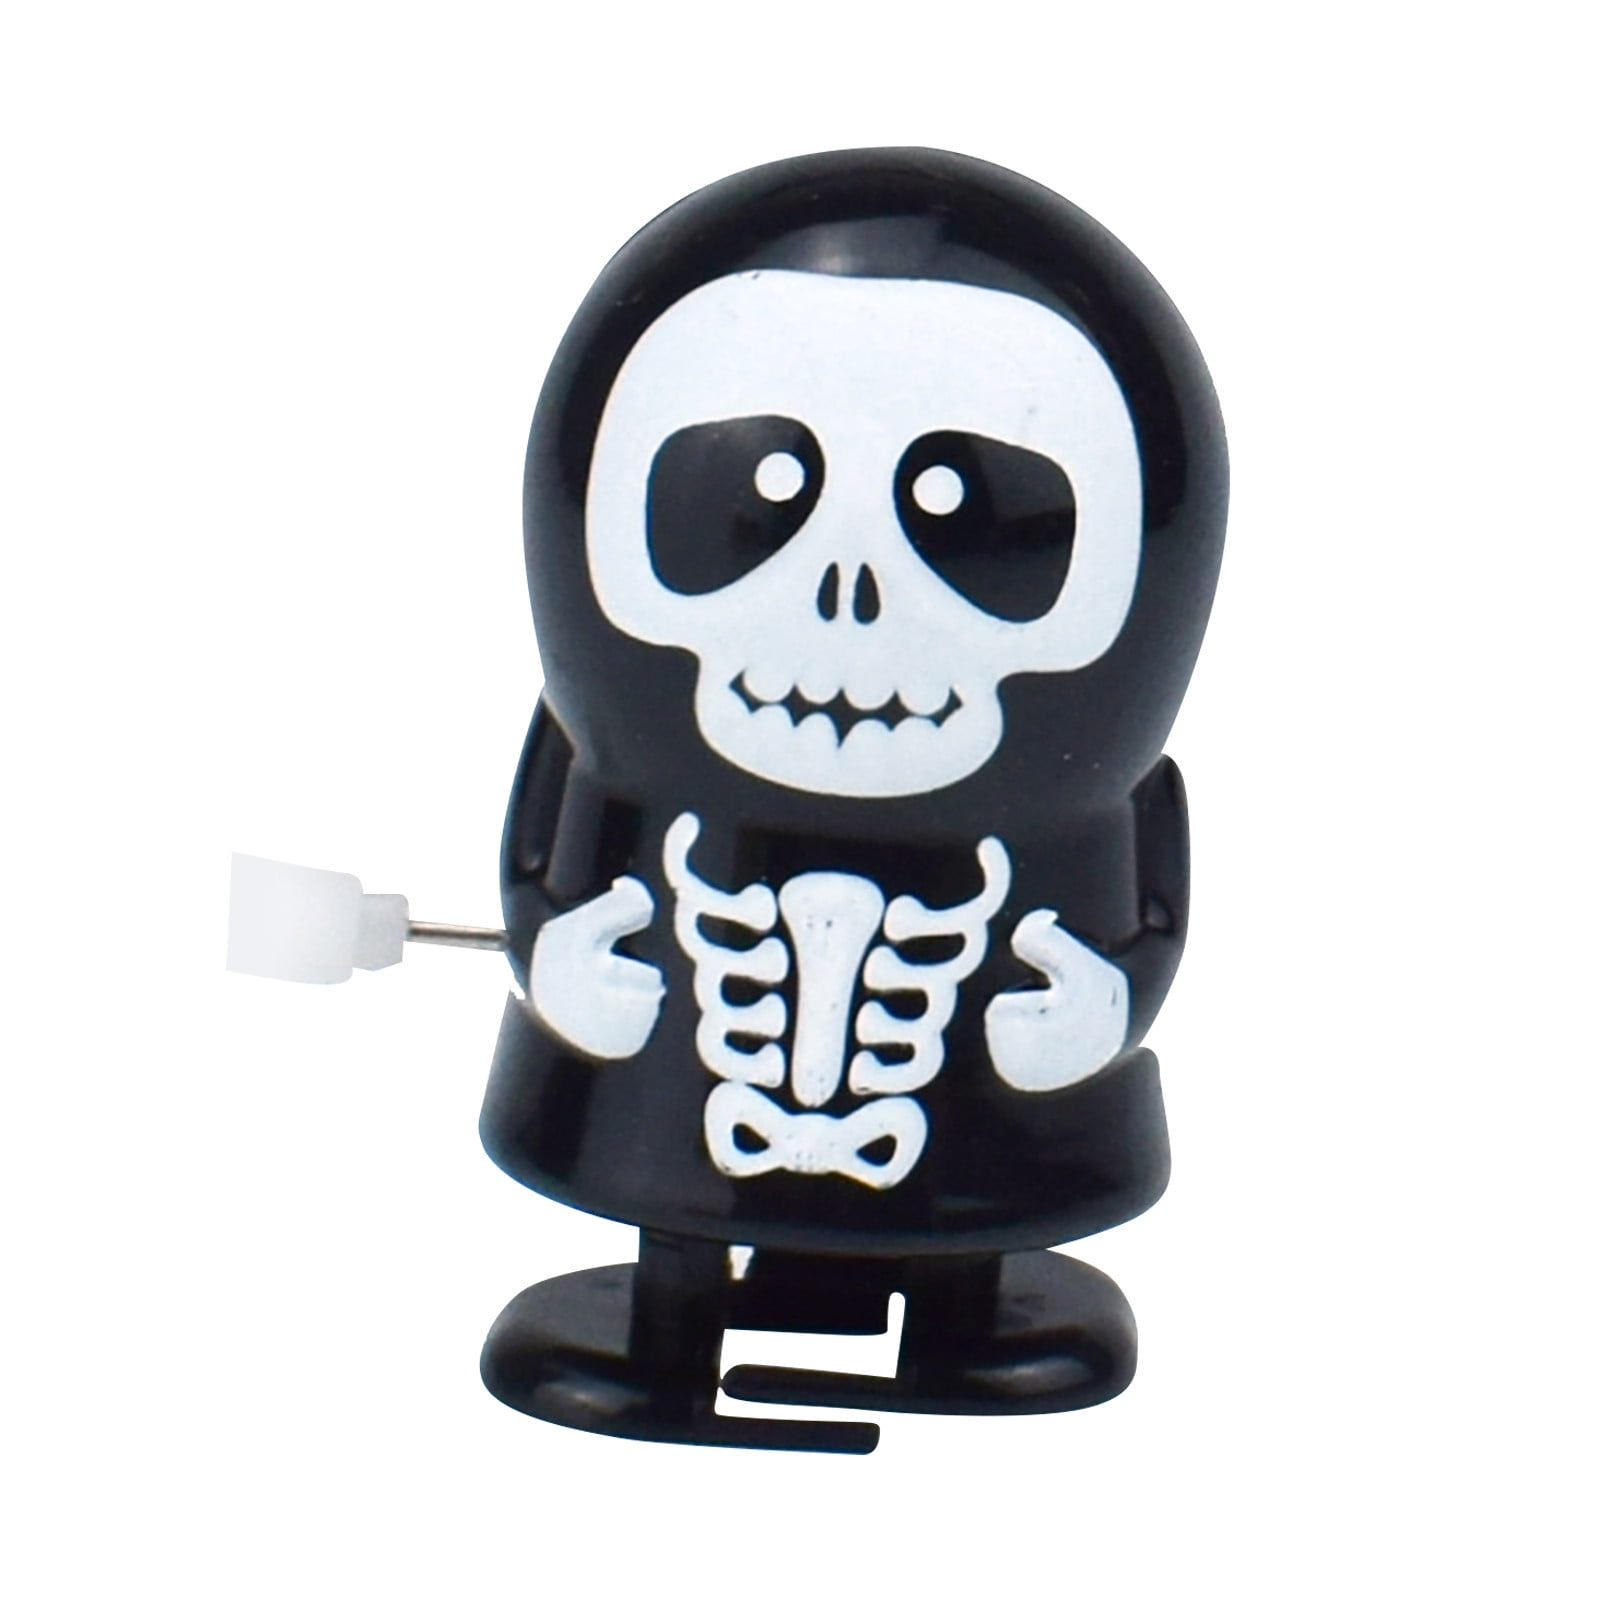 Special Mini Skull Shape Wind Up Toy For Kid's Clockwork Children Toy Gift 